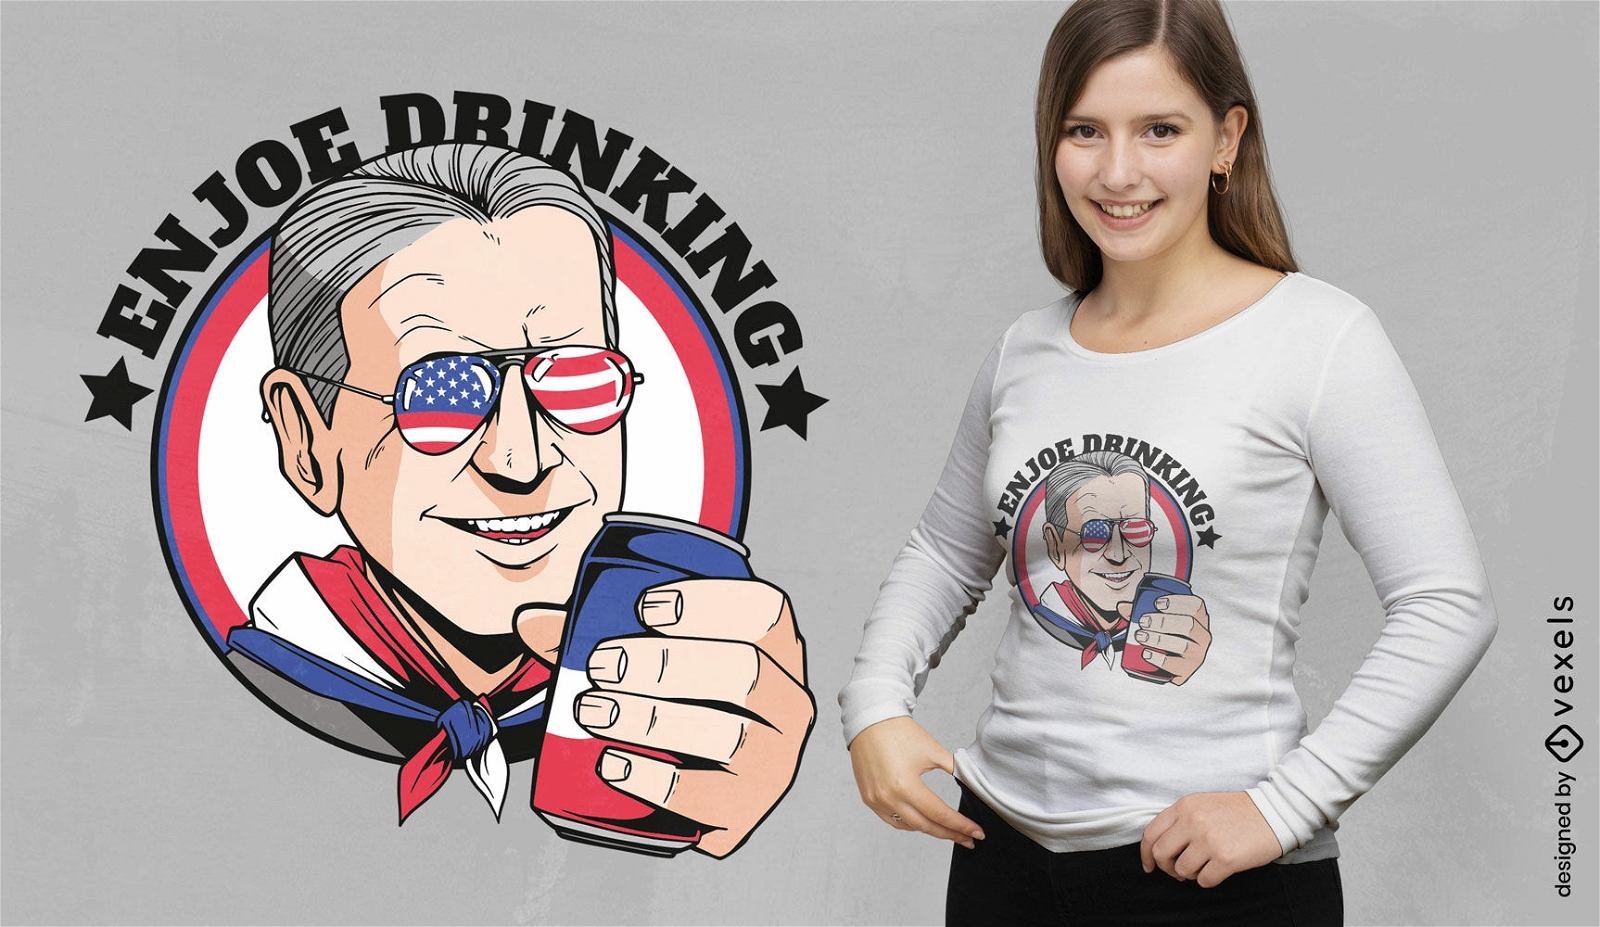 Joe Biden drinking pun t-shirt design